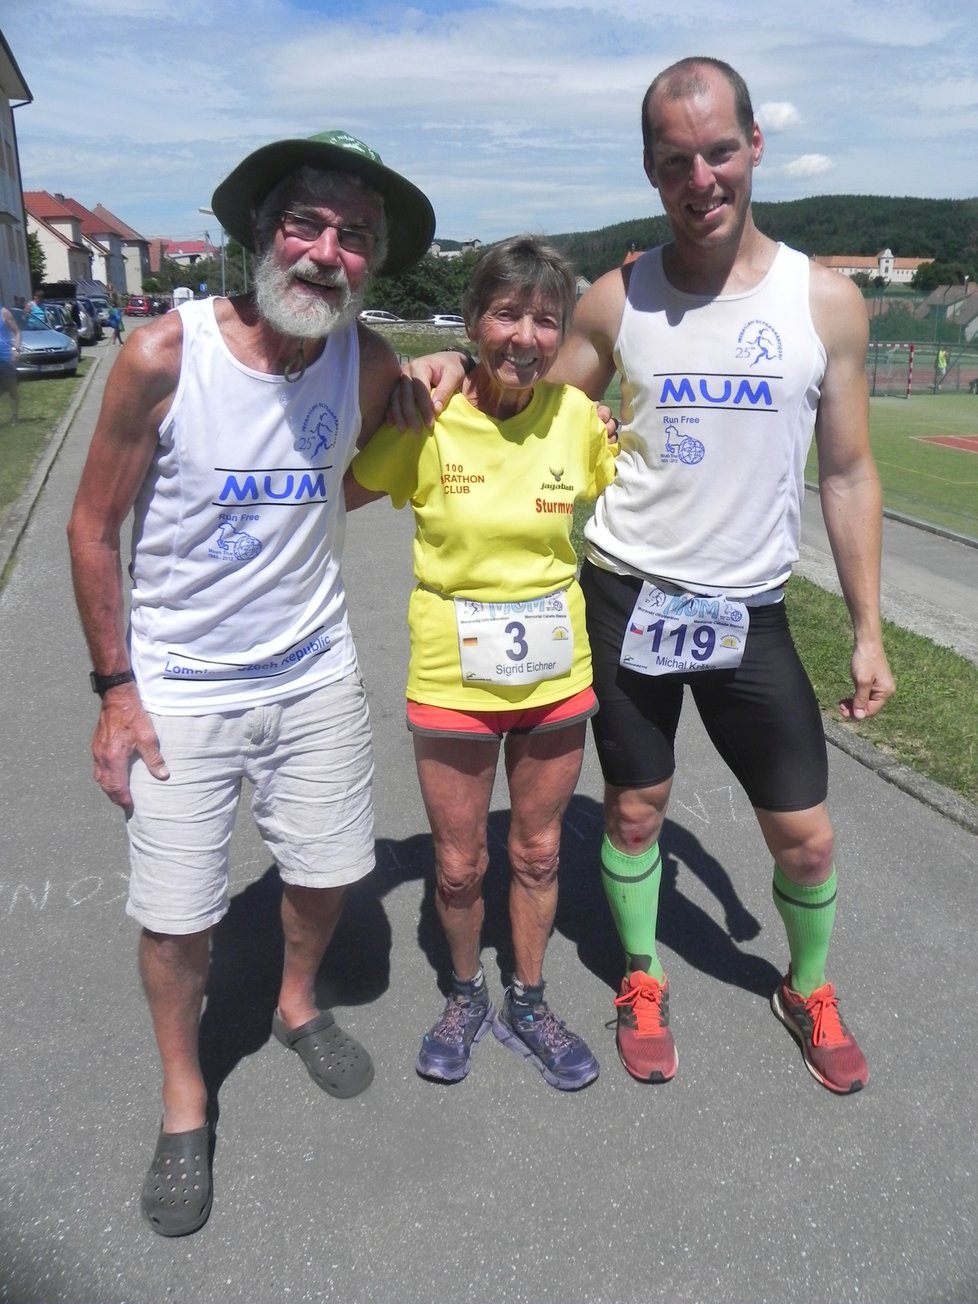 Legenda a jeden z organizátorů akce Tomáš Rusek (vlevo), Sigrid Eichnerová a vytrvalec Michal Krška.